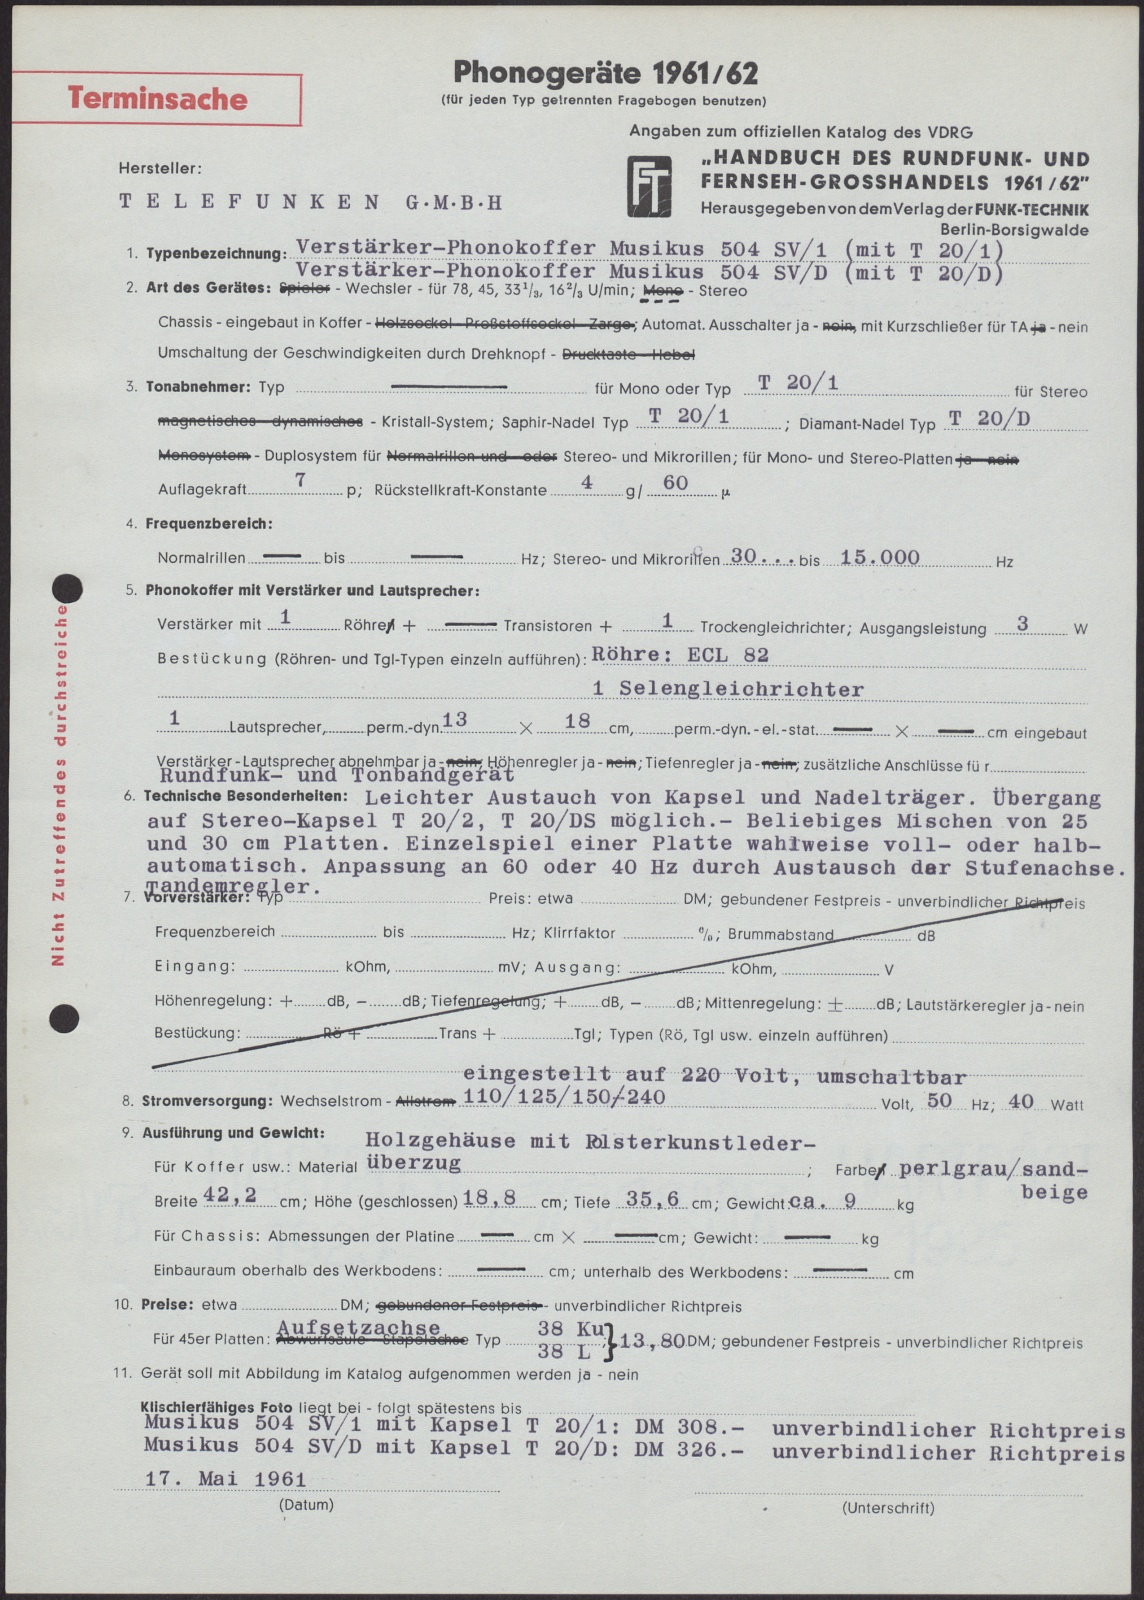 Datenblatt: Phonogeräte 1961/62 Verstärker-Phonokoffer Musikus 504 SV/1 (mit T 20/1) und Verstärker-Phonokoffer Musikus 504 SV/D (mit T 20/D) (Stiftung Deutsches Technikmuseum Berlin CC0)